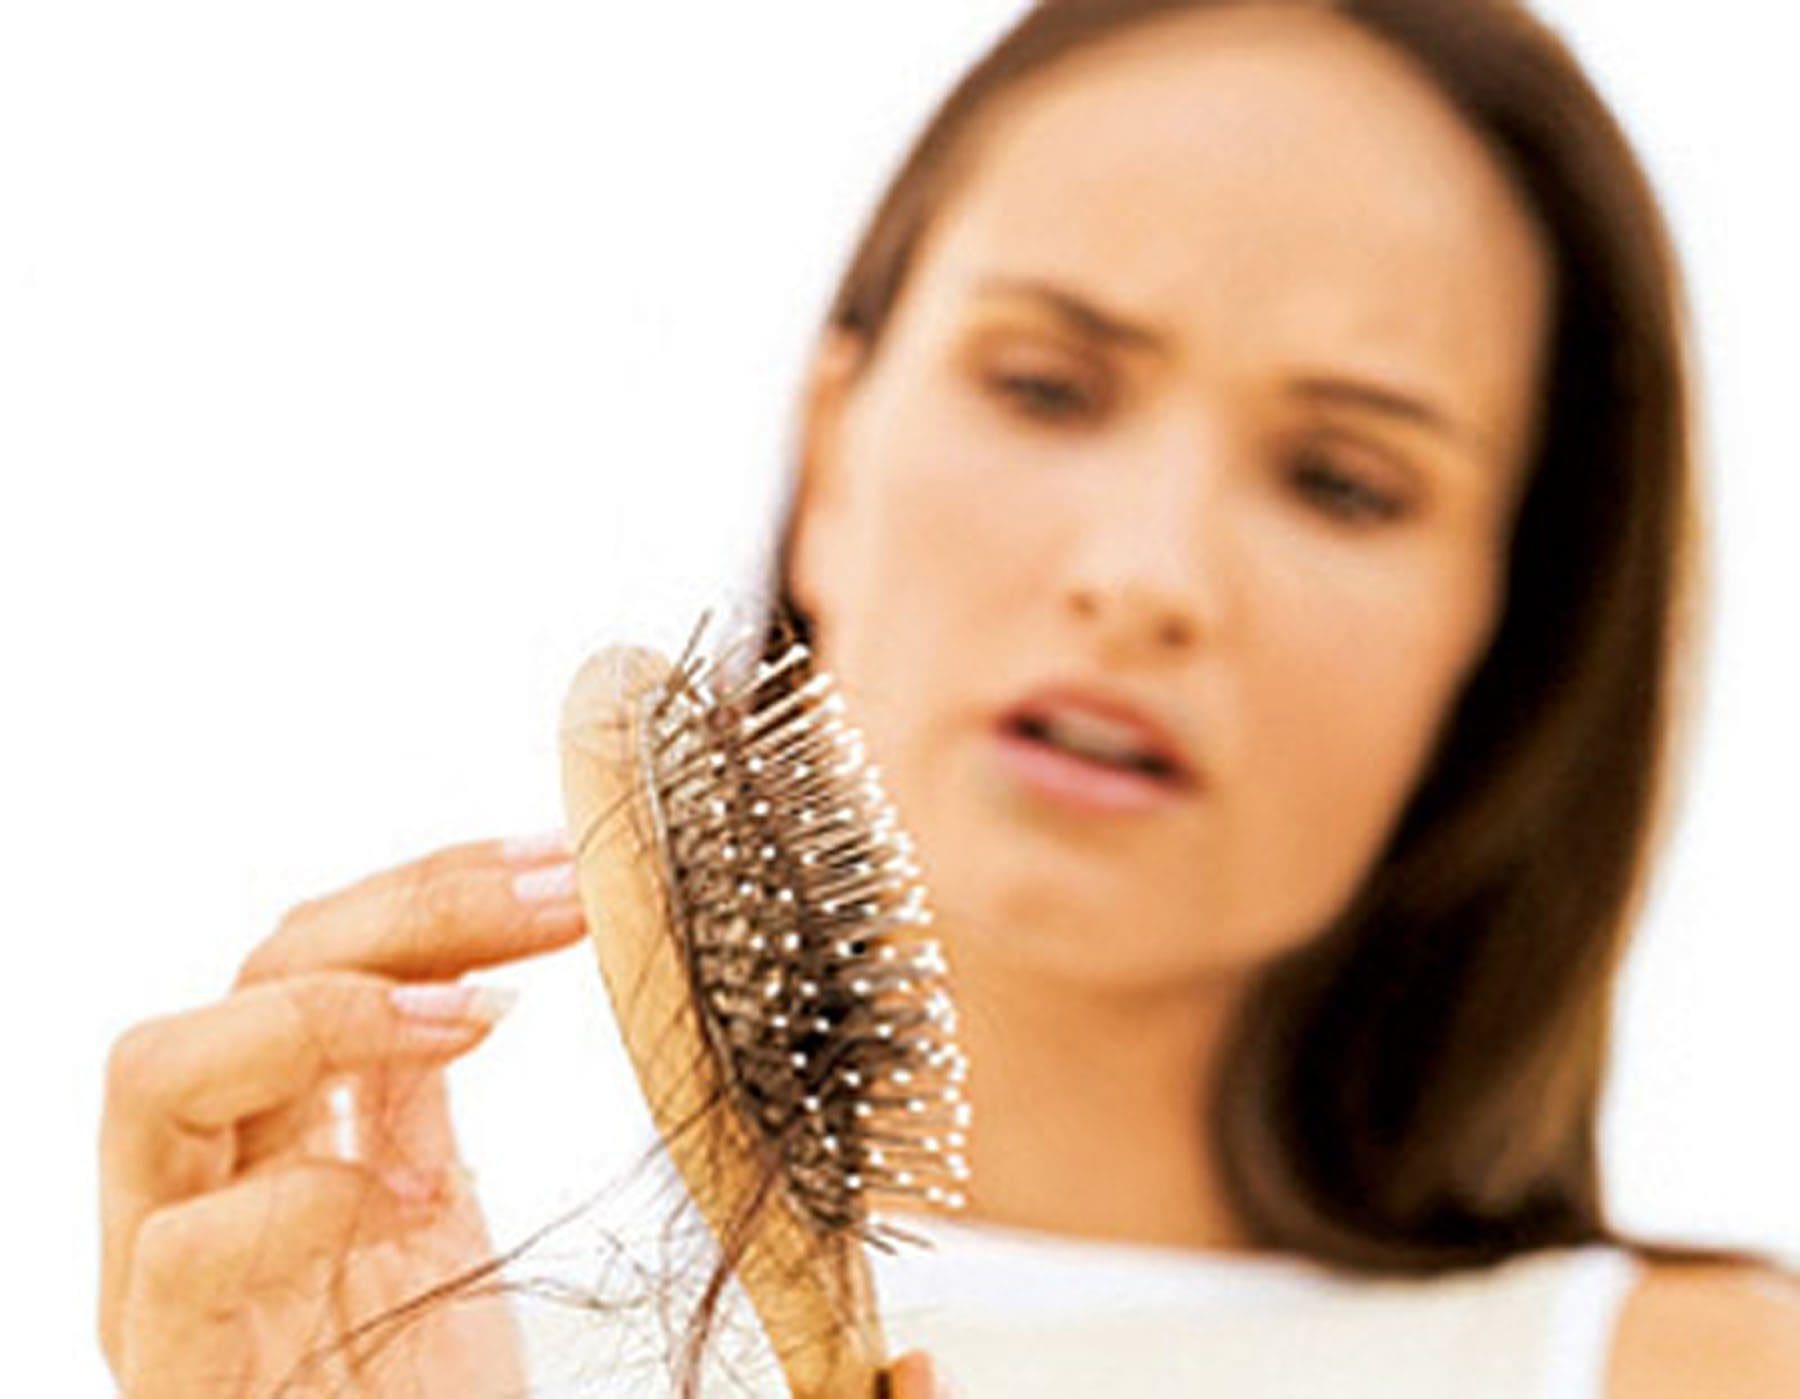 Five early signs of Hair Loss - Jeffrey Paul Restoring Beautiful Hair